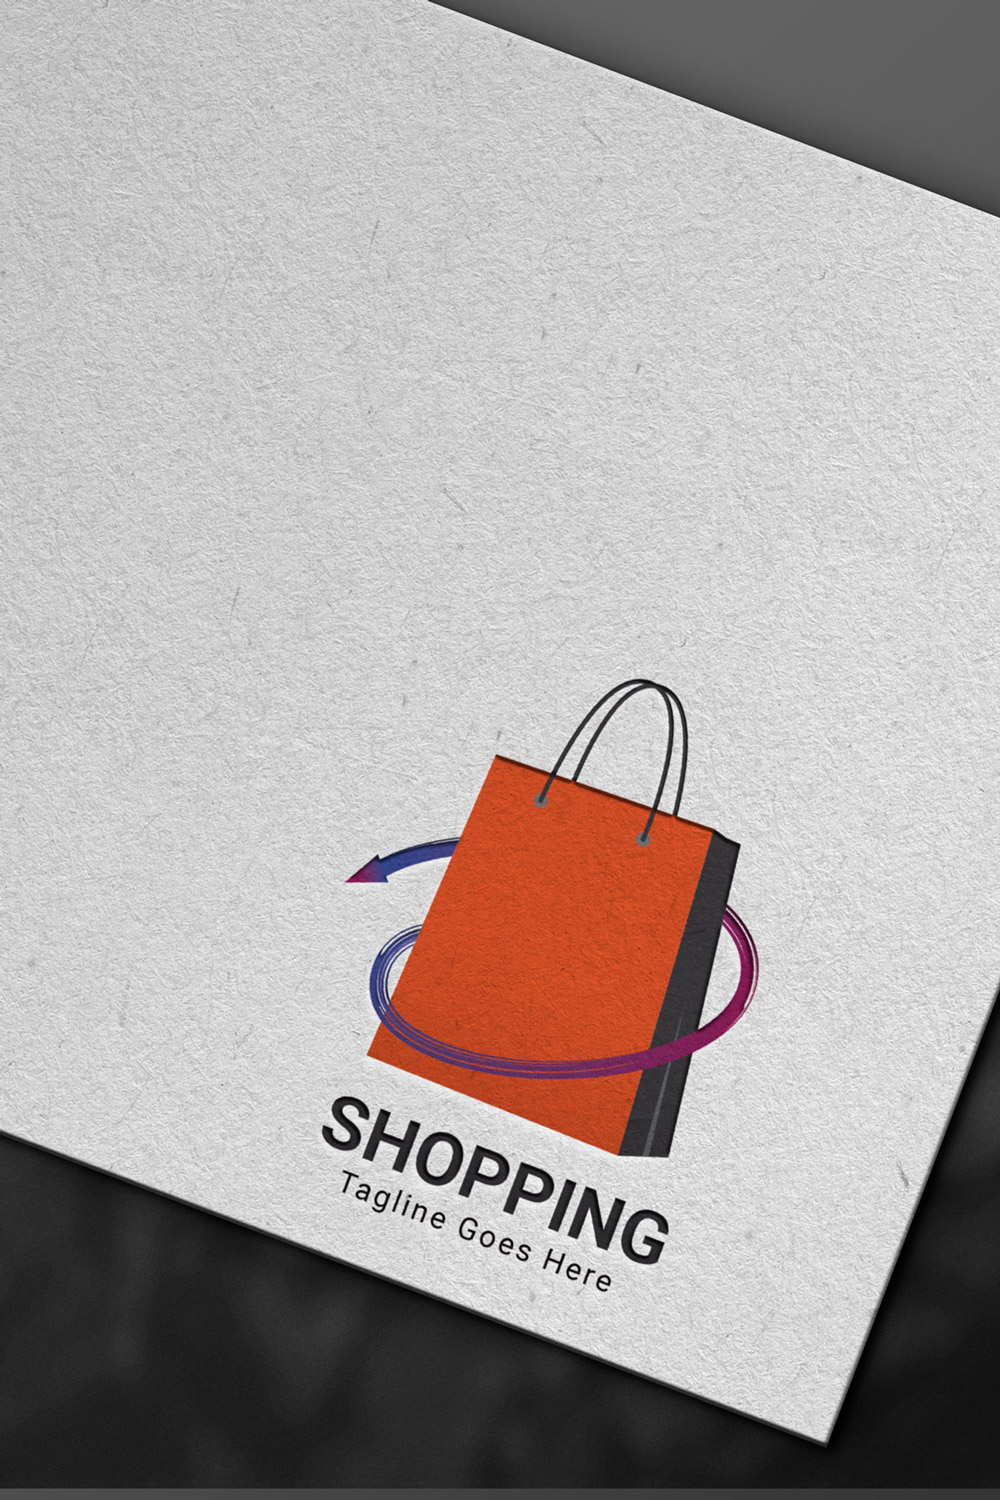 Shopping Logo Template Pinterest image.